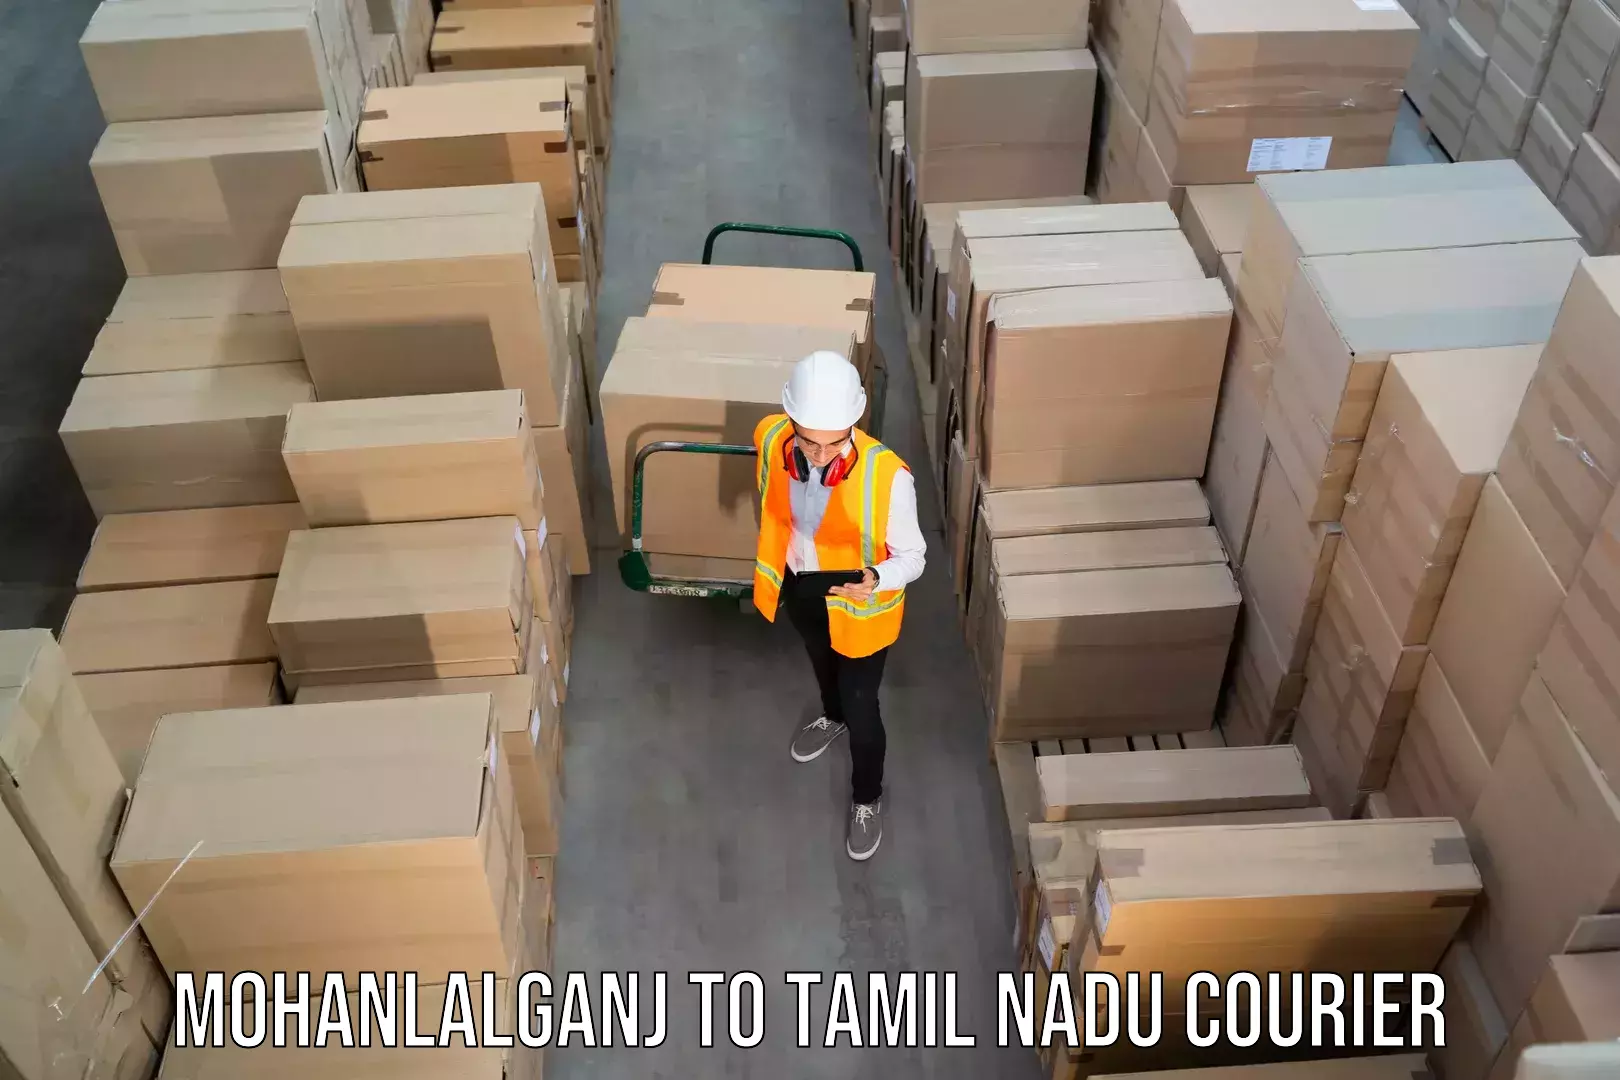 Next-day delivery options Mohanlalganj to Tamil Nadu